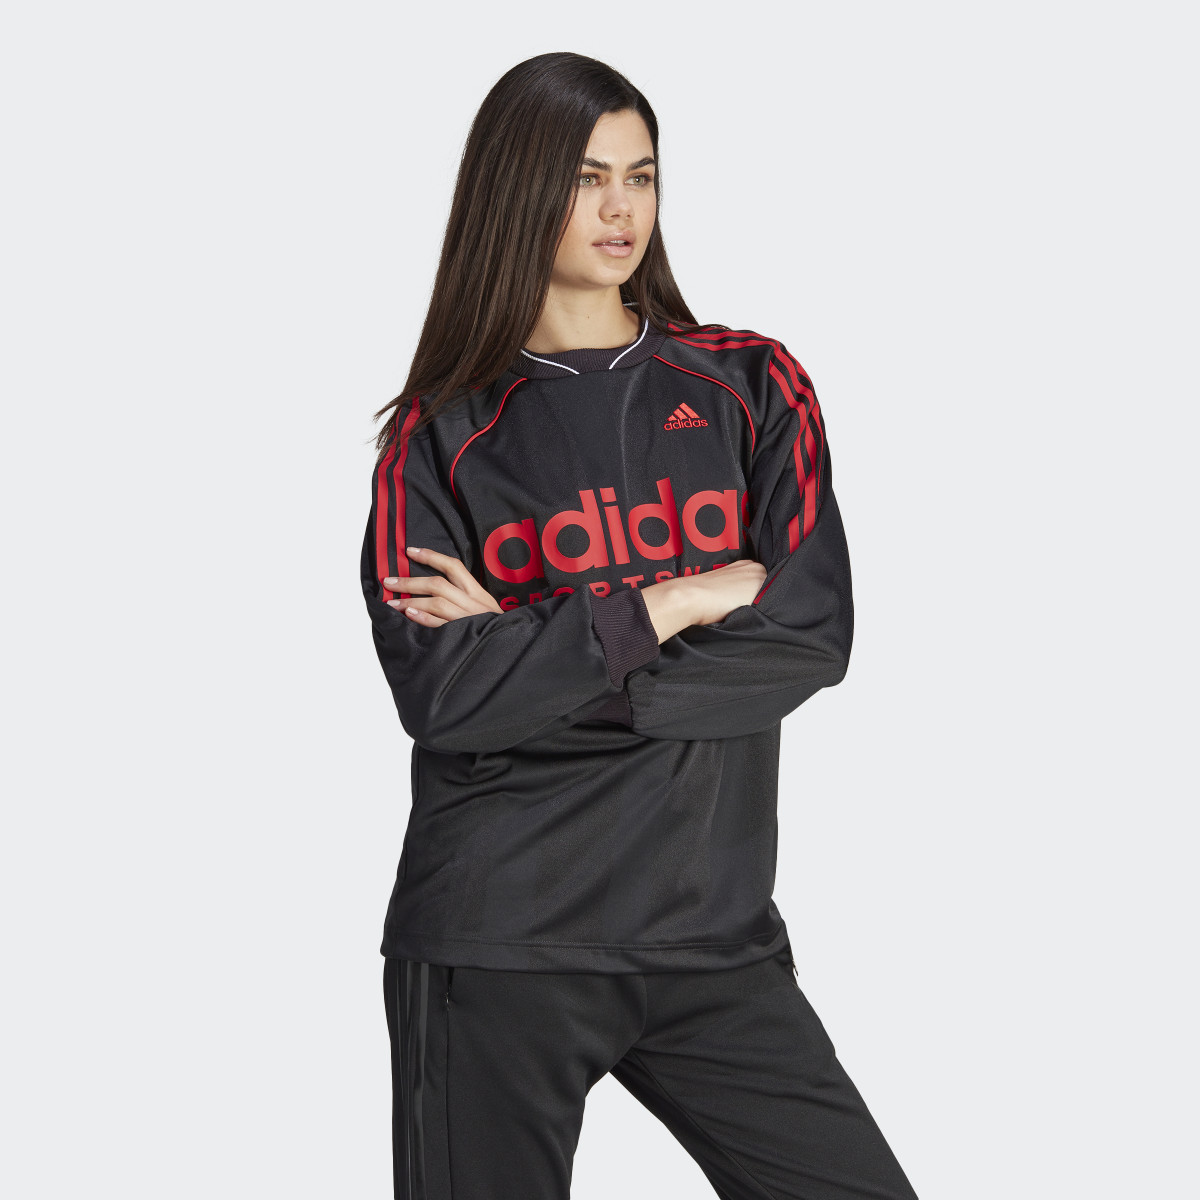 Adidas Jacquard Long Sleeve Jersey. 5